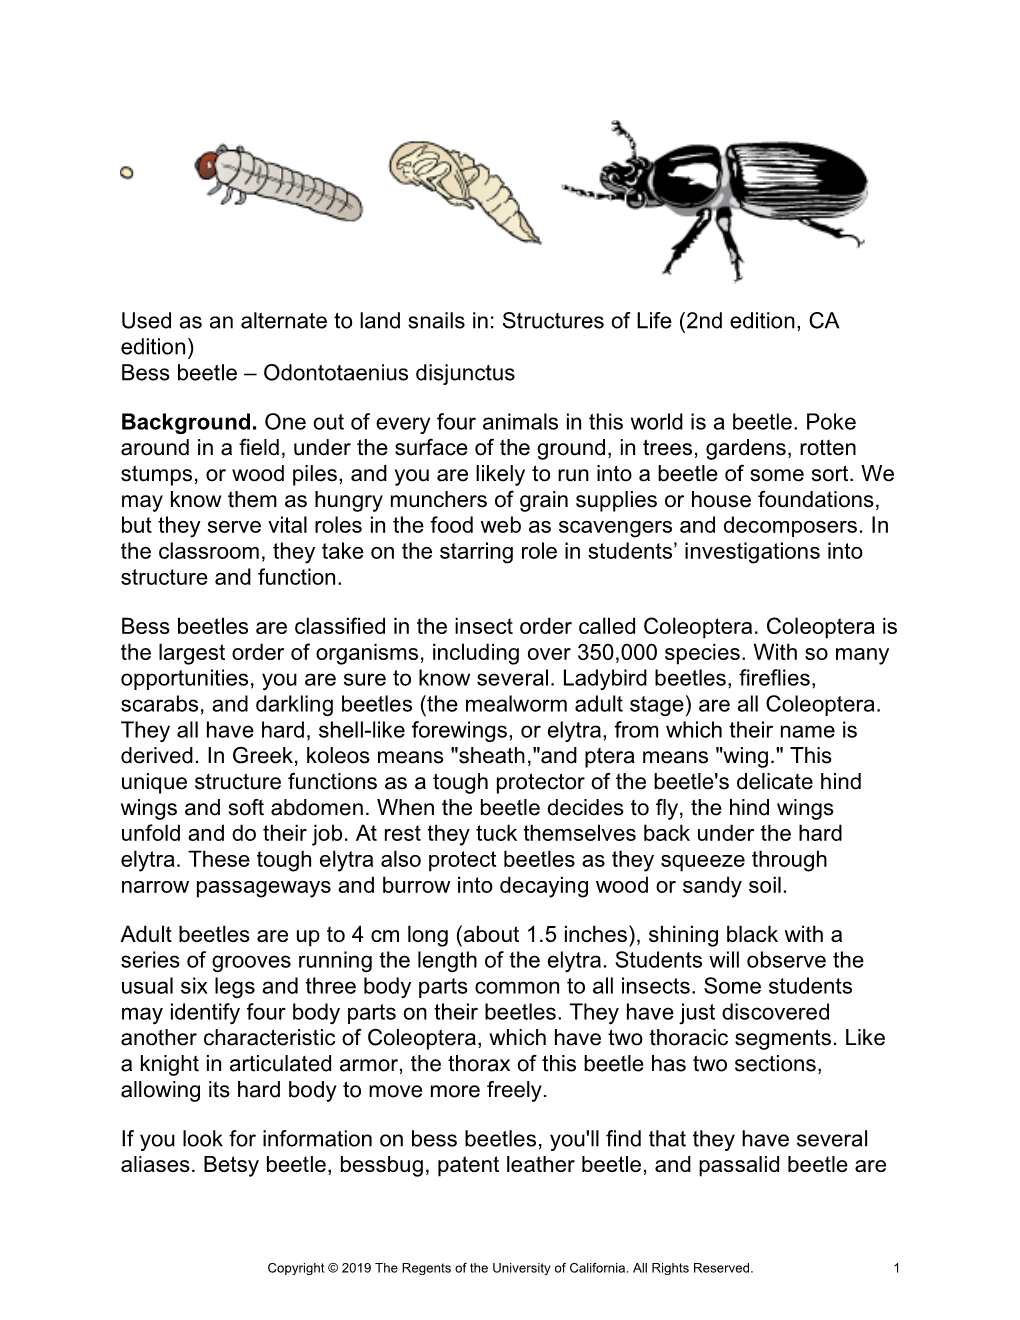 Bess Beetle – Odontotaenius Disjunctus